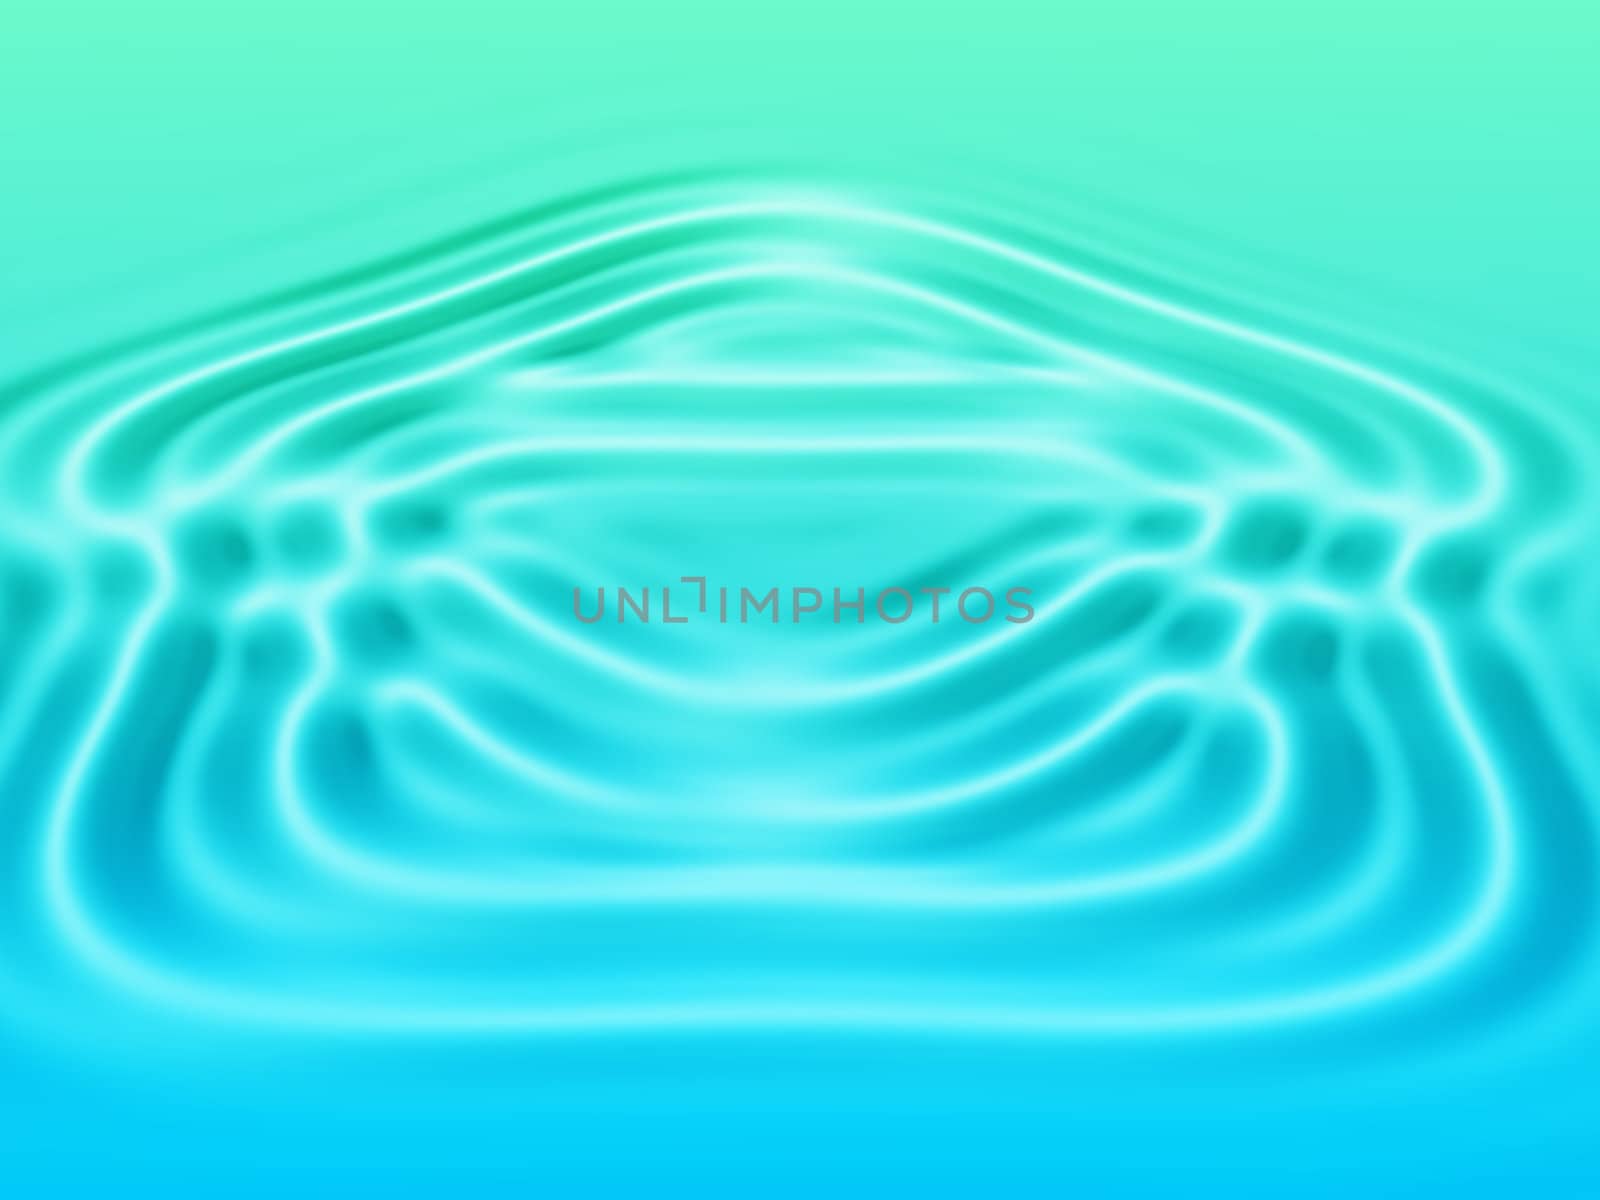 House shaped rippled water waves illustration background